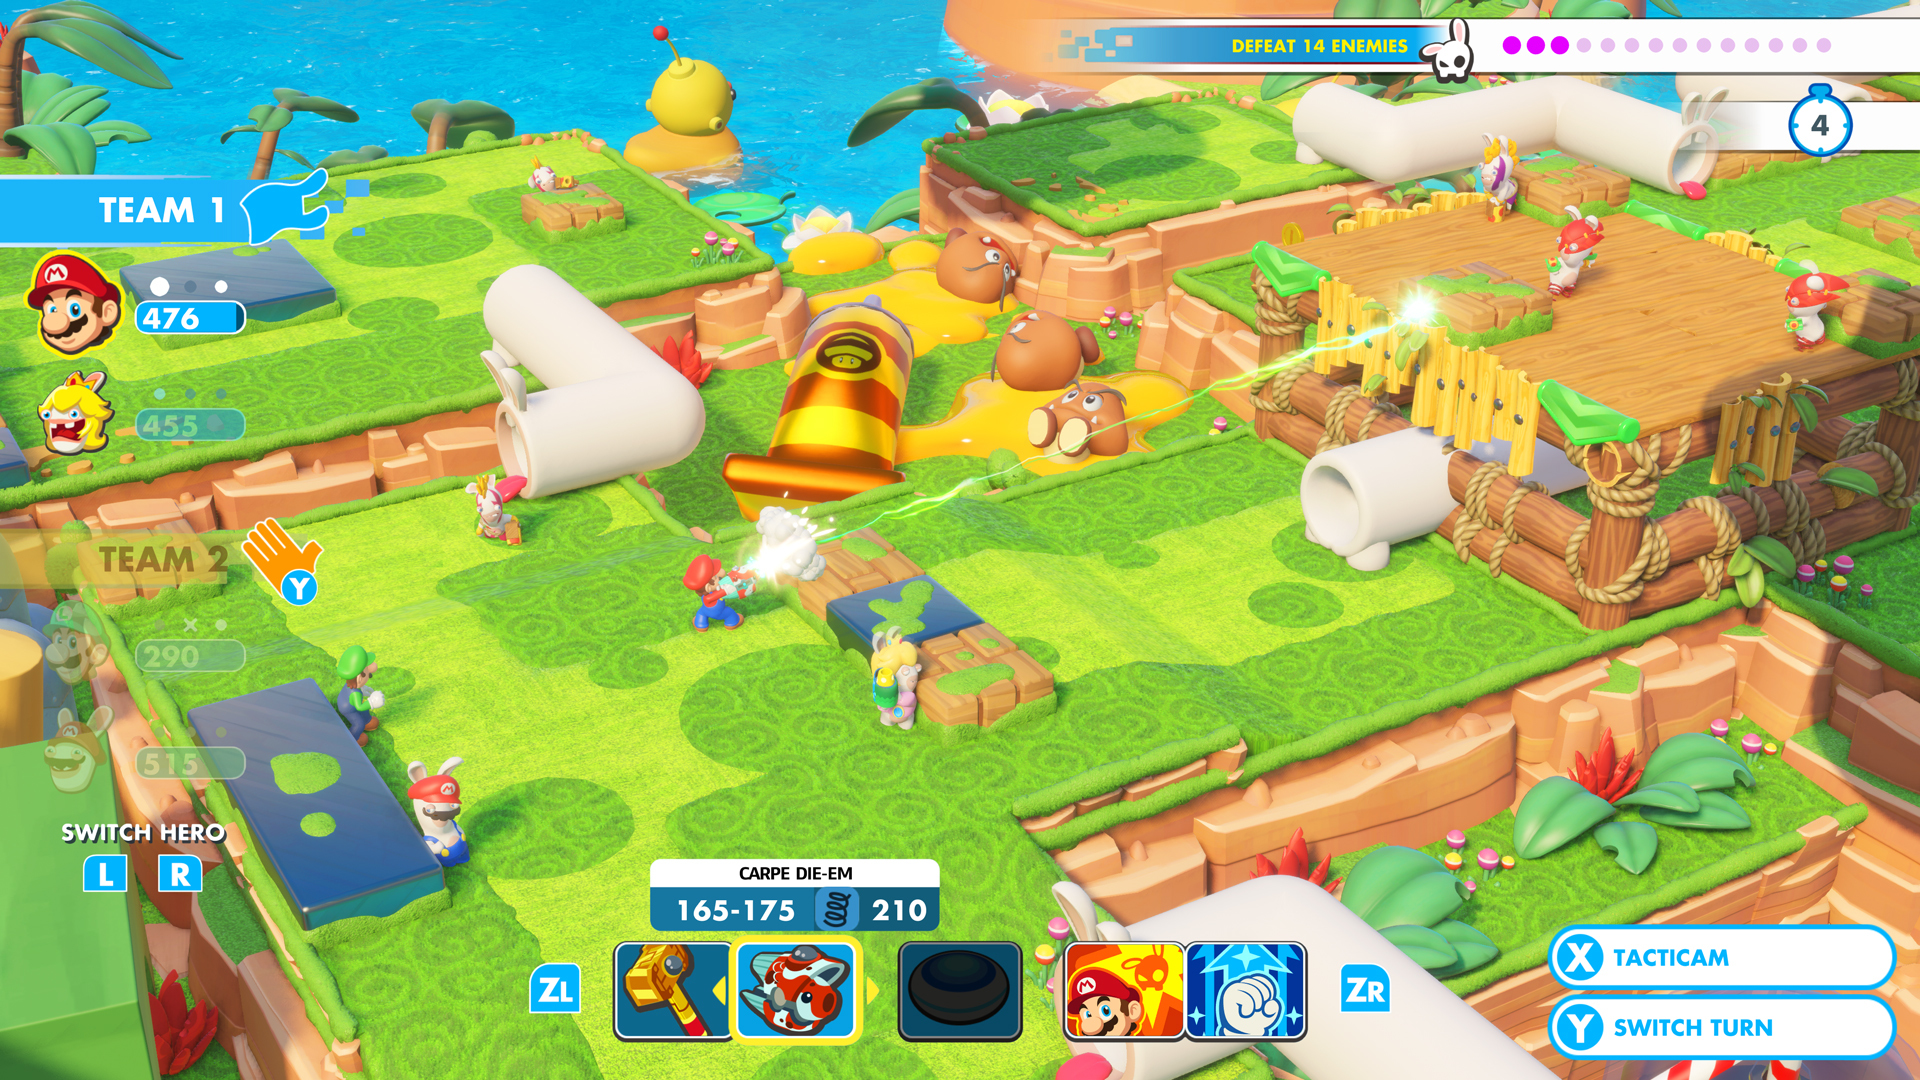 Game: Mario Rabbids Kingdom Battle Review